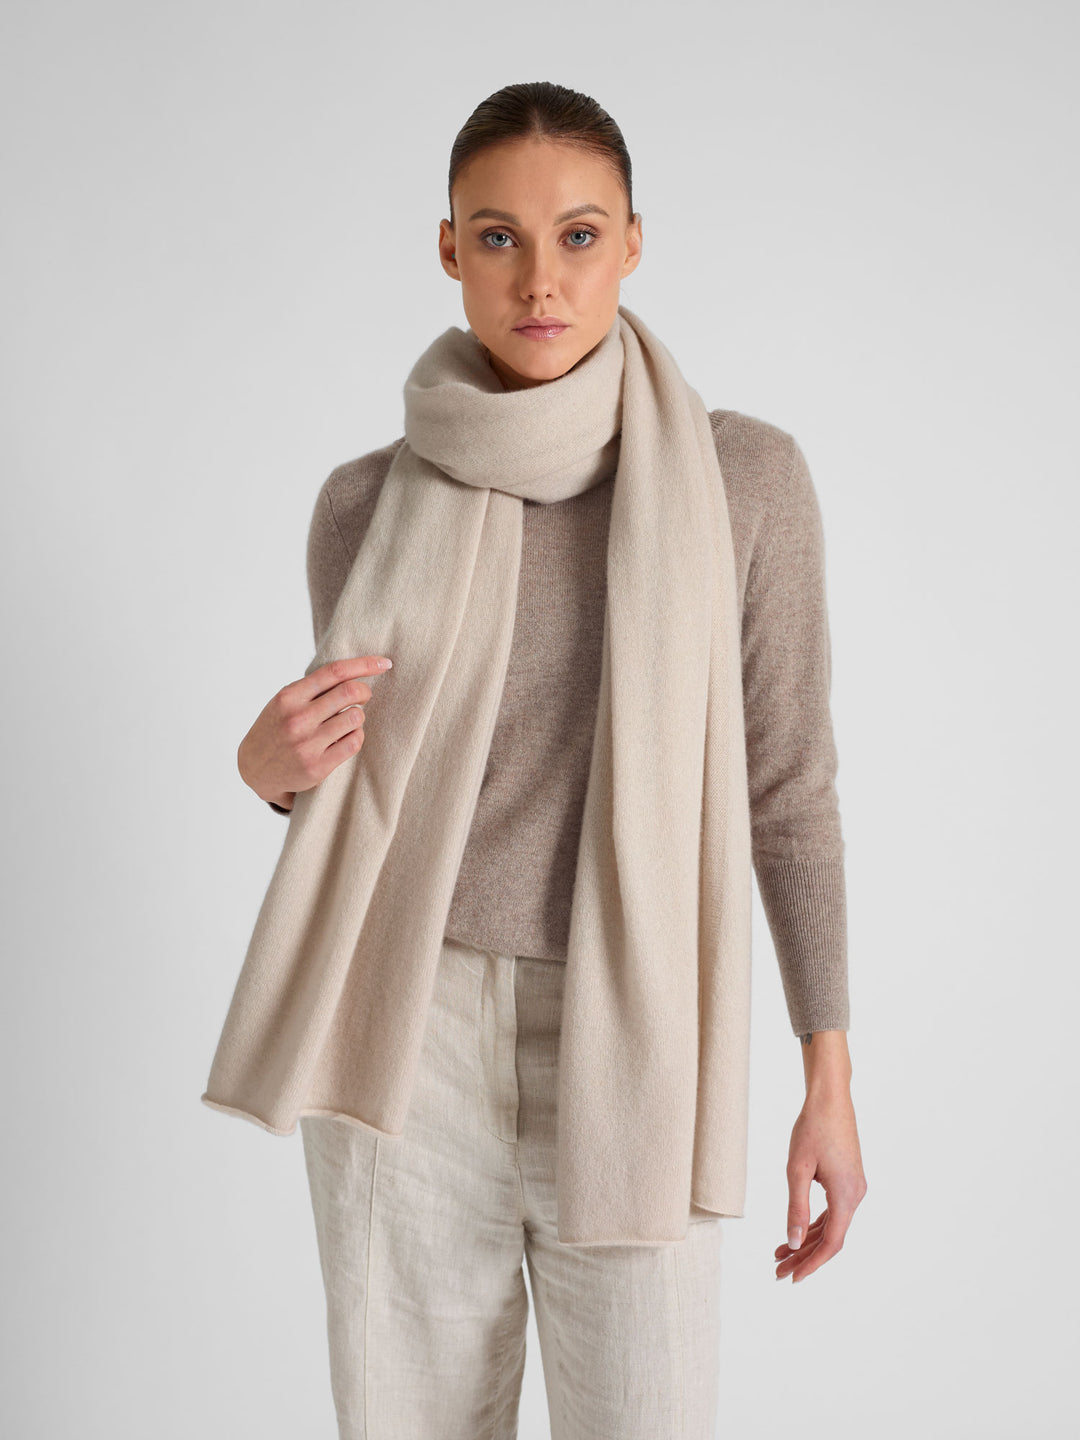 Cashmere scarf "Signature" in 100% cashmere. Color: Cream. Scandinavian design by Kashmina